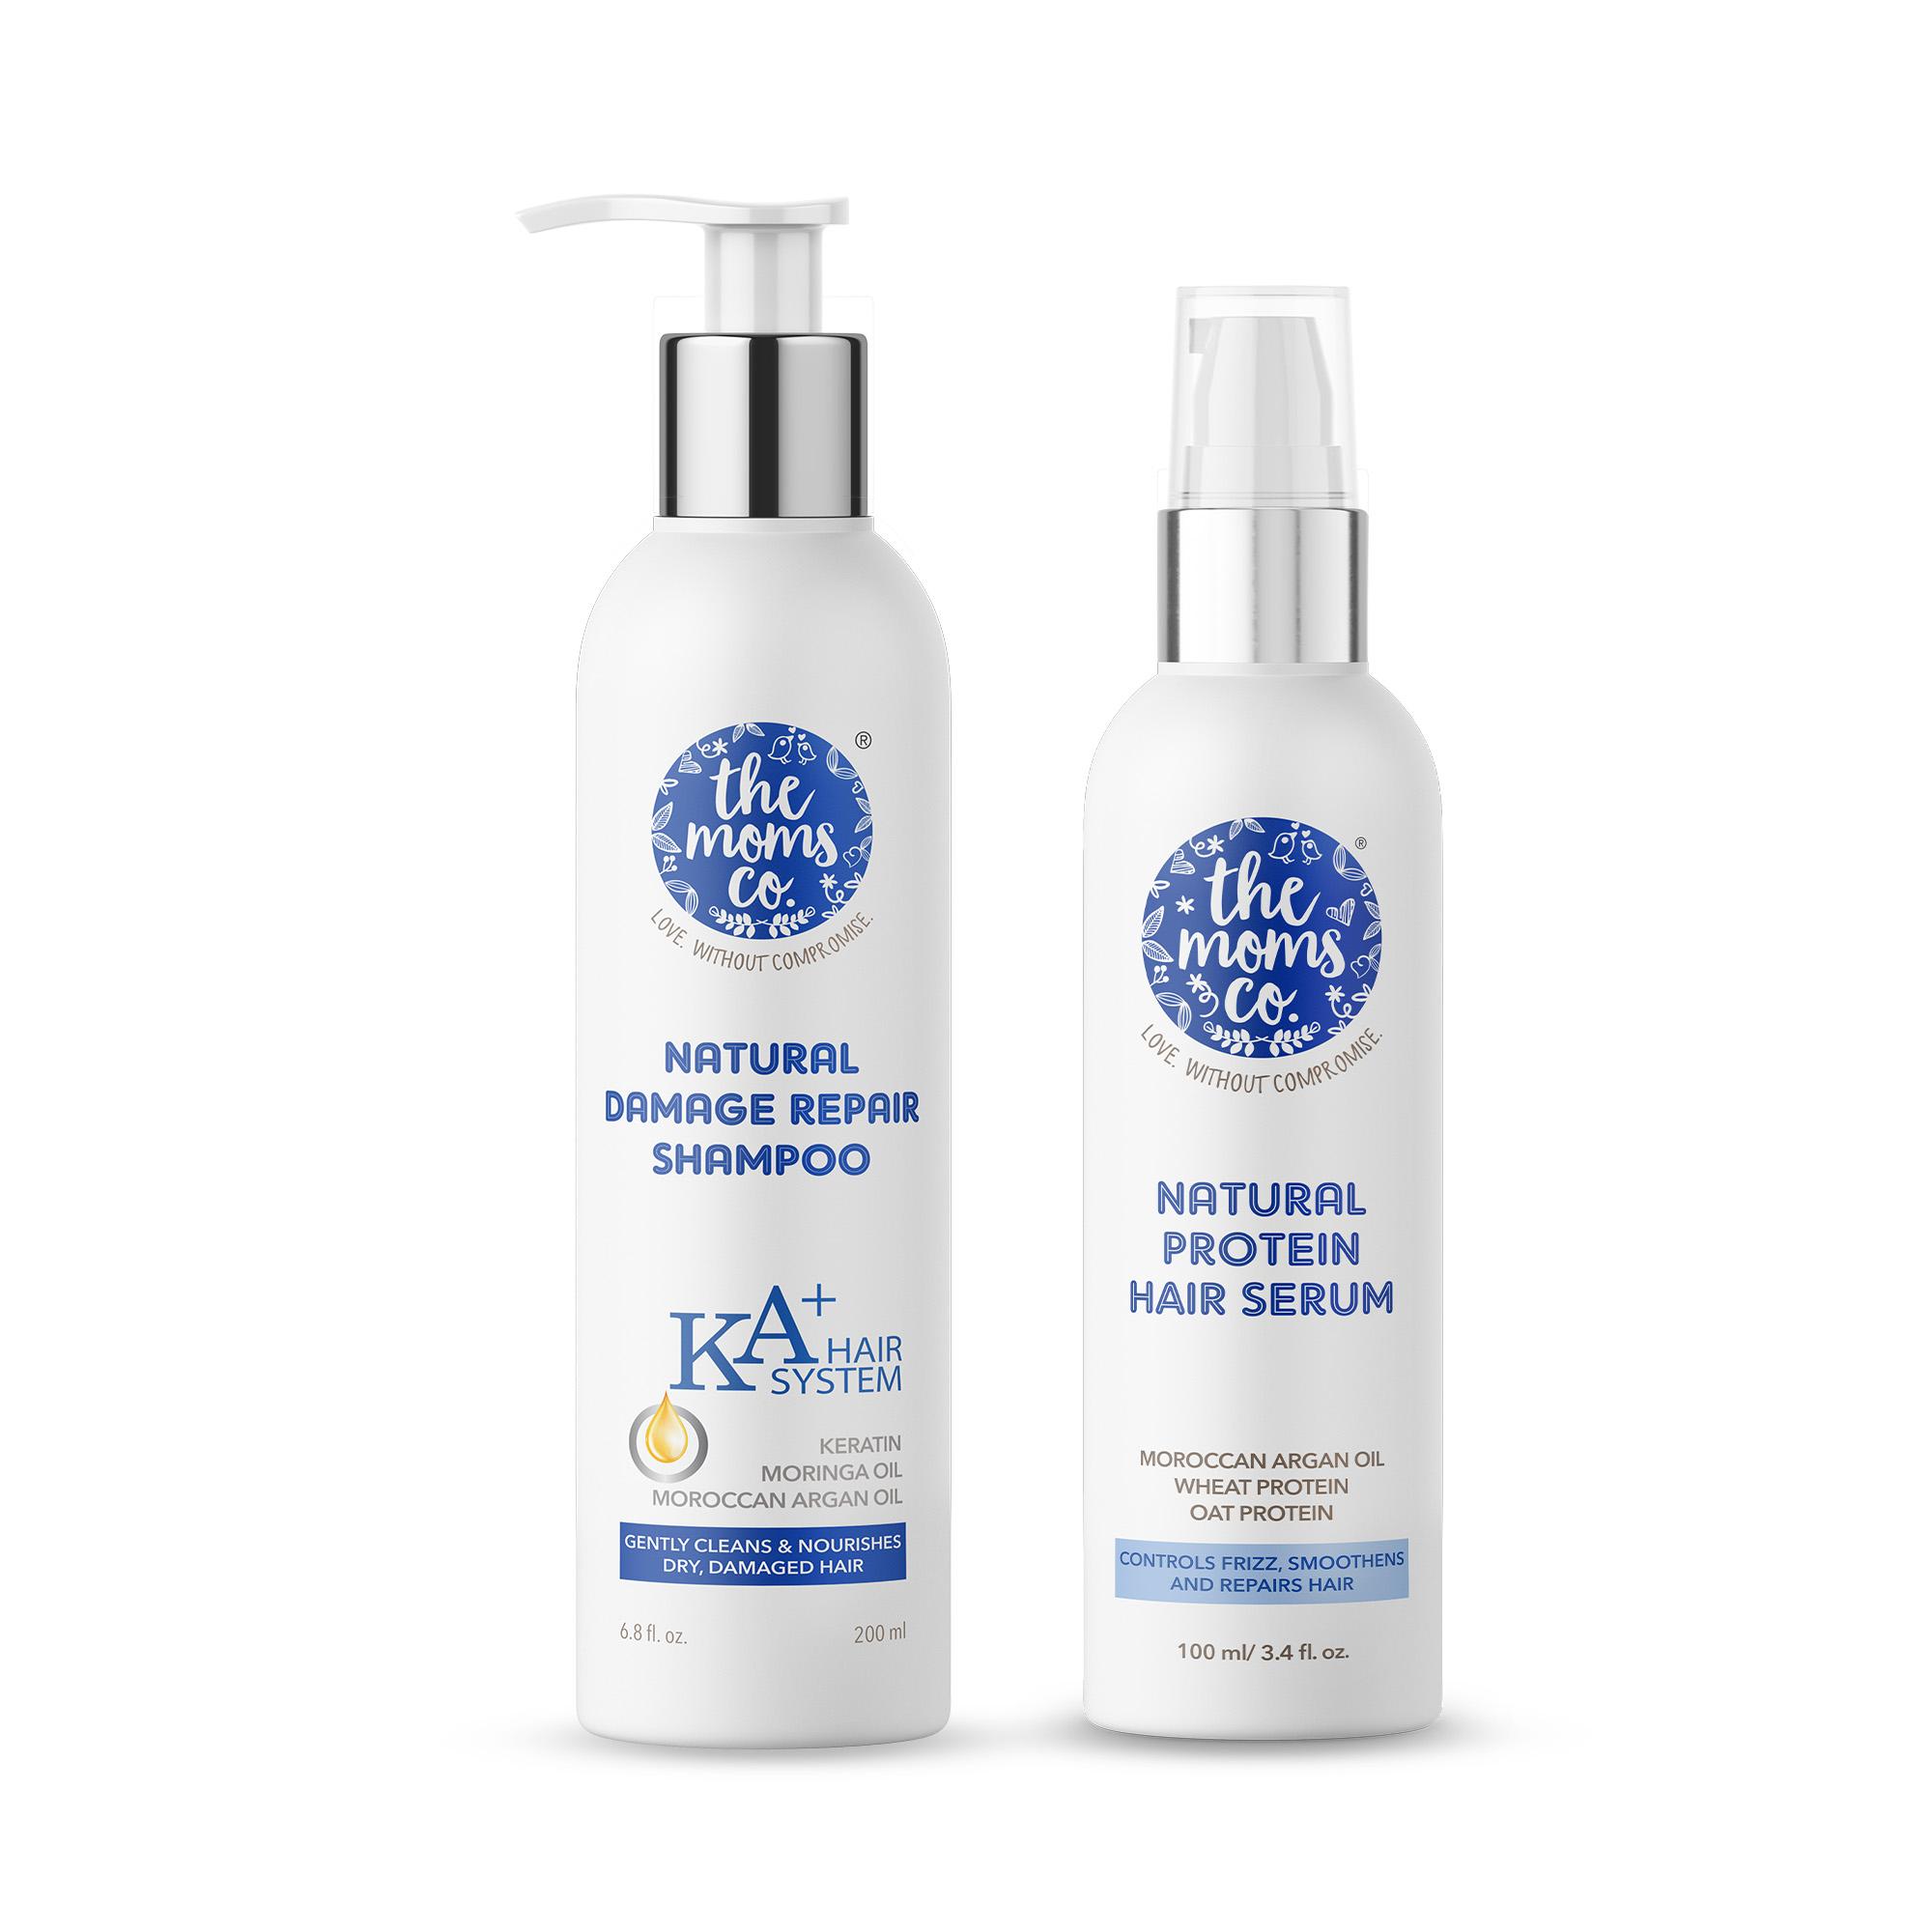 The Mom's Co. | The Mom's Co. Natural Dama Ge Repair Ka + Hair Shampoo & Natural Protein Serum Combo